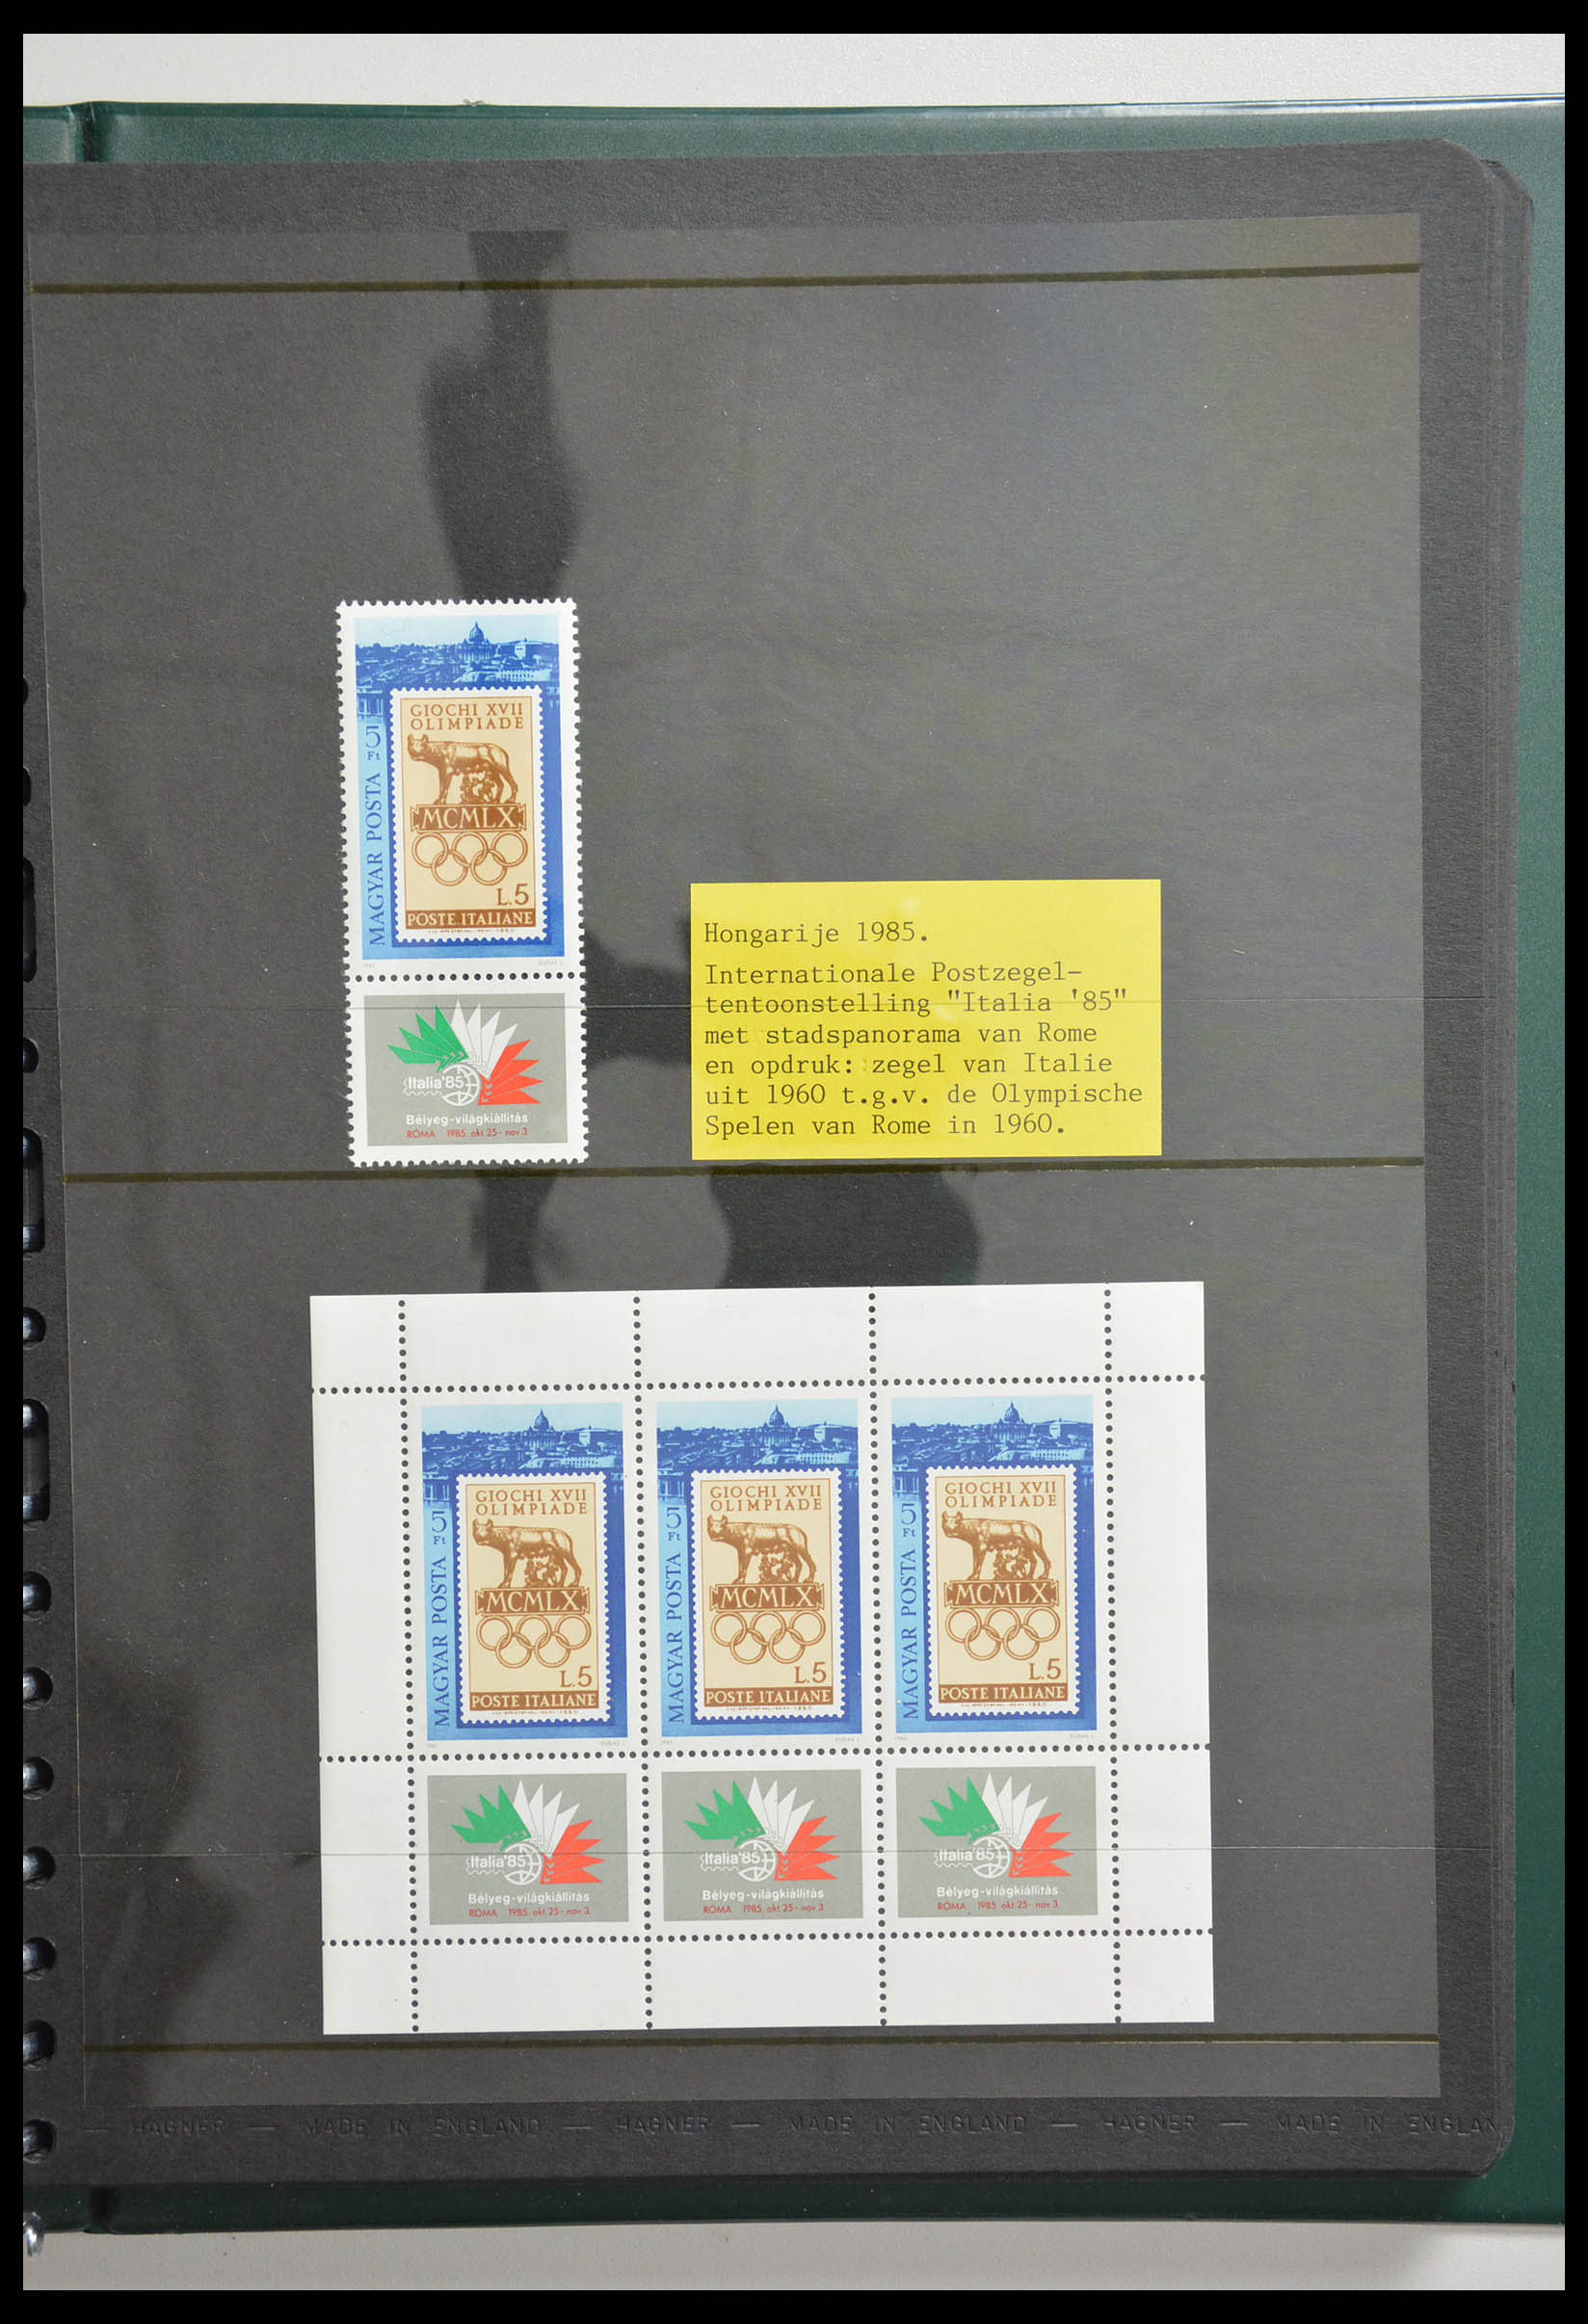 28337 099 - 28337 Postzegel op postzegel 1840-2001.